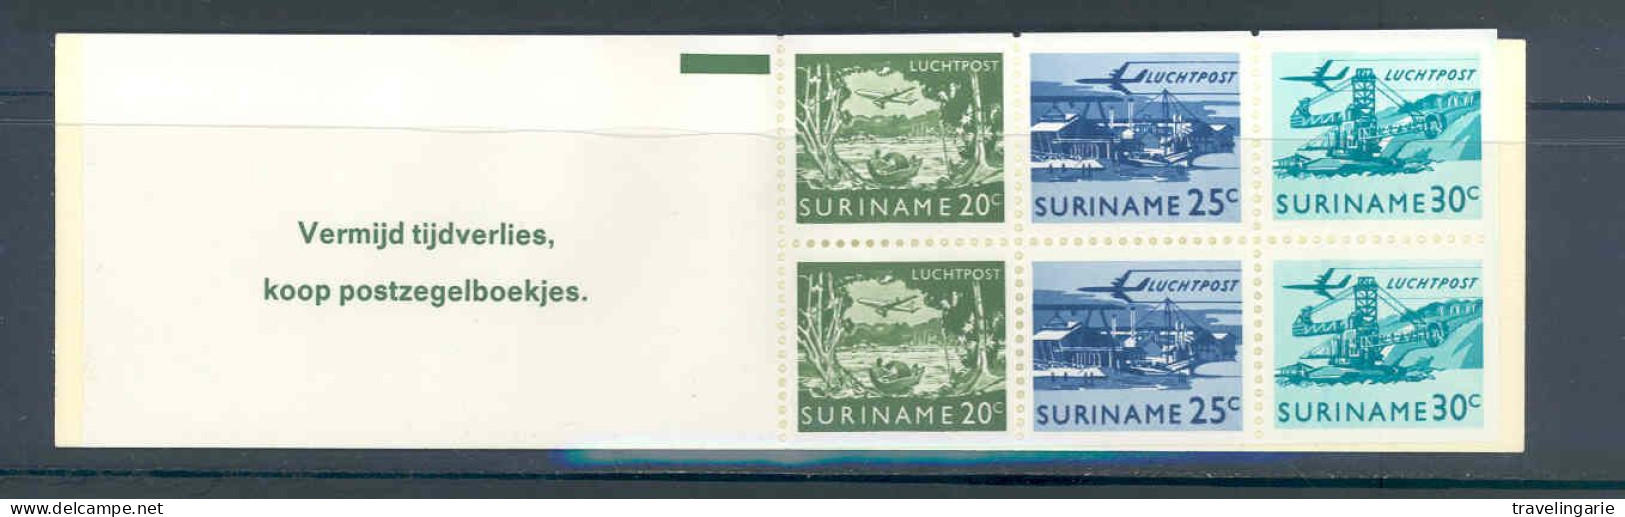 Suriname 1976 Airmail Stamp Booklet MNH/** - Surinam